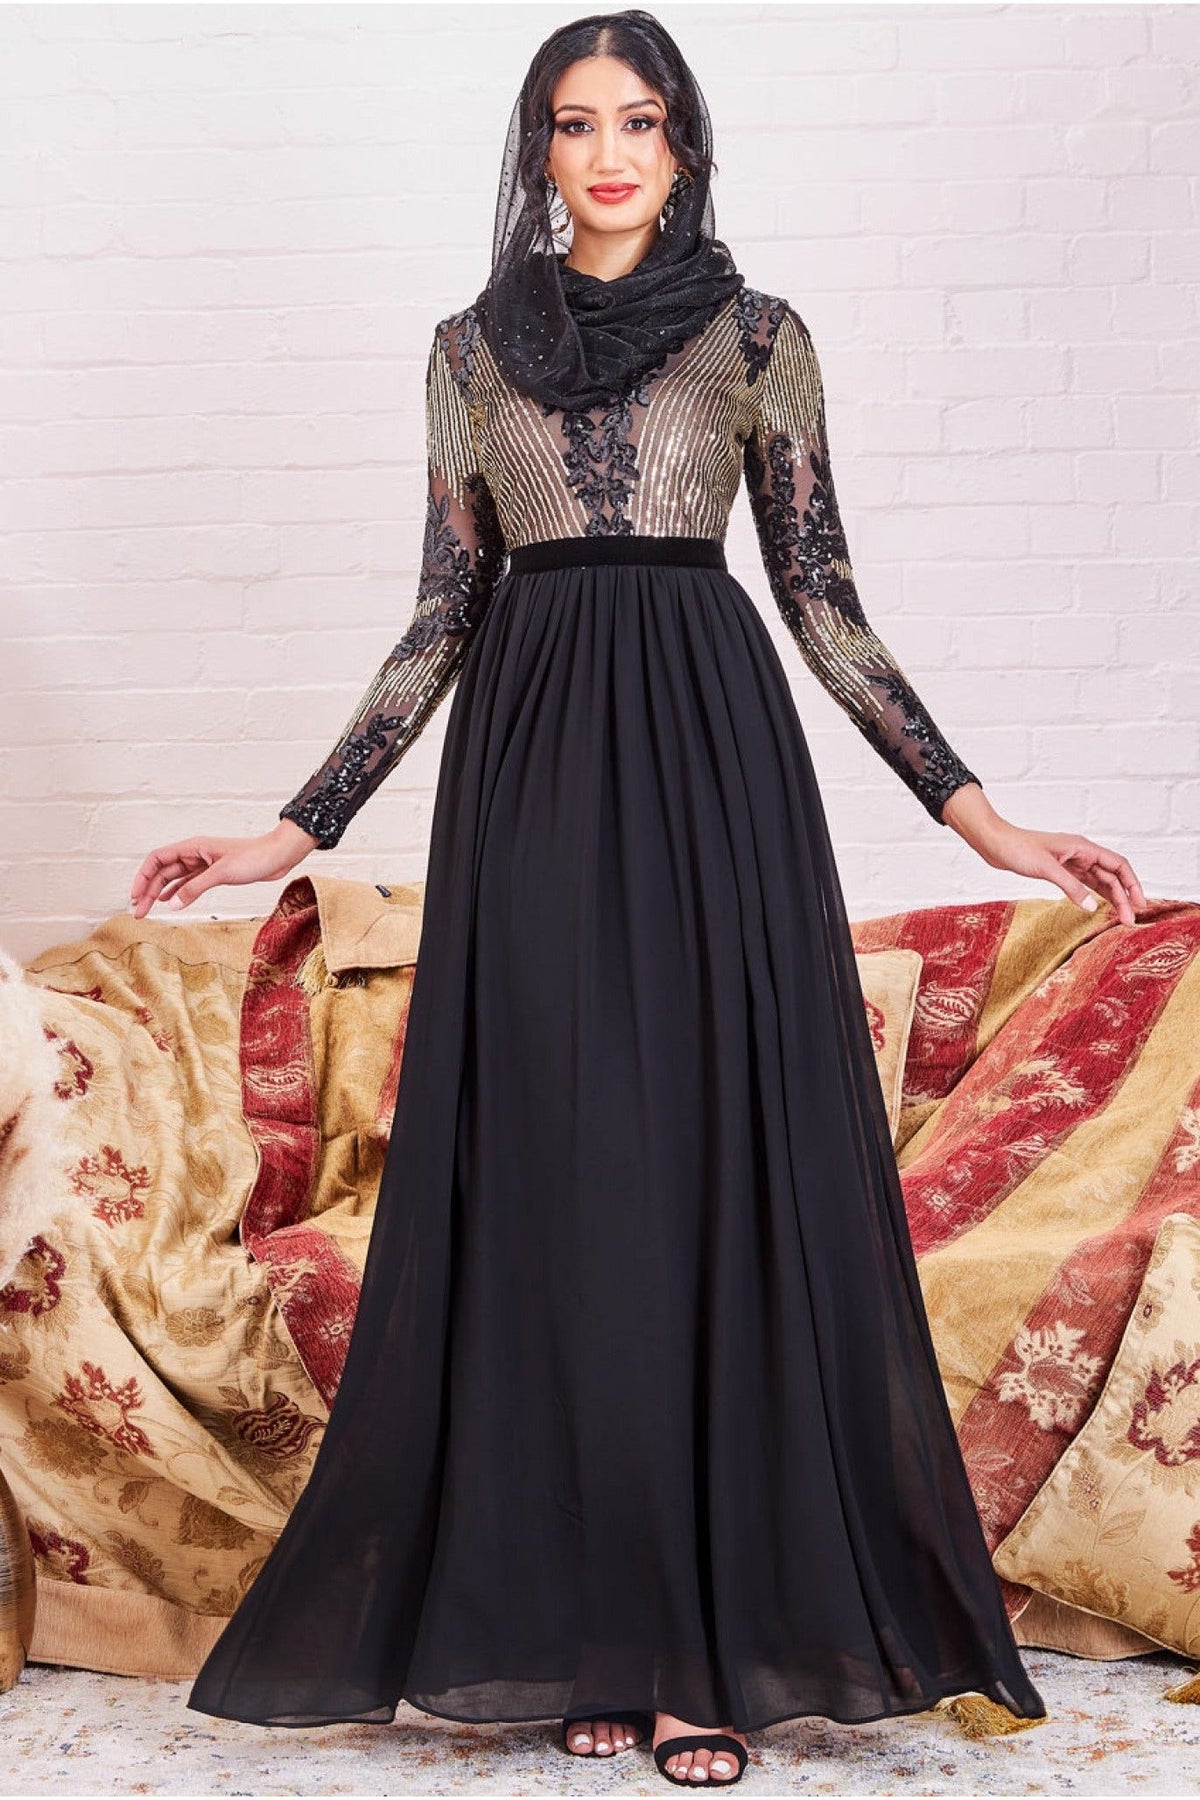 Modesty Sequin Mesh Bodice Maxi Dress - Black DR3453MOD